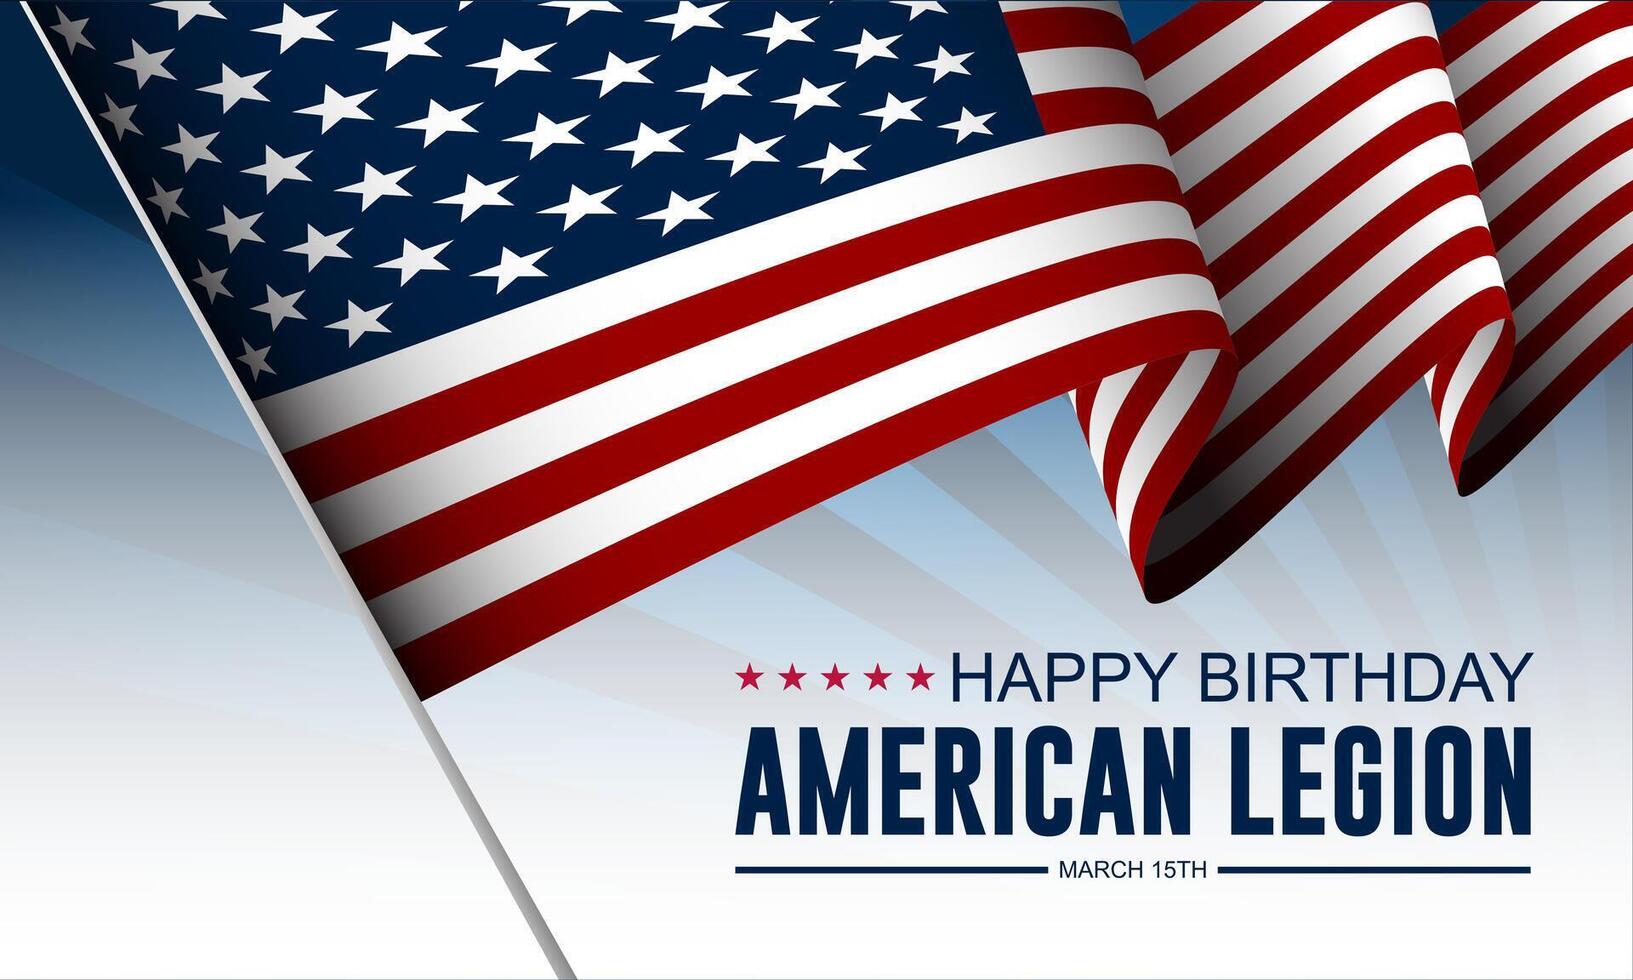 Happy Birthday American Legion Background Vector Illustration